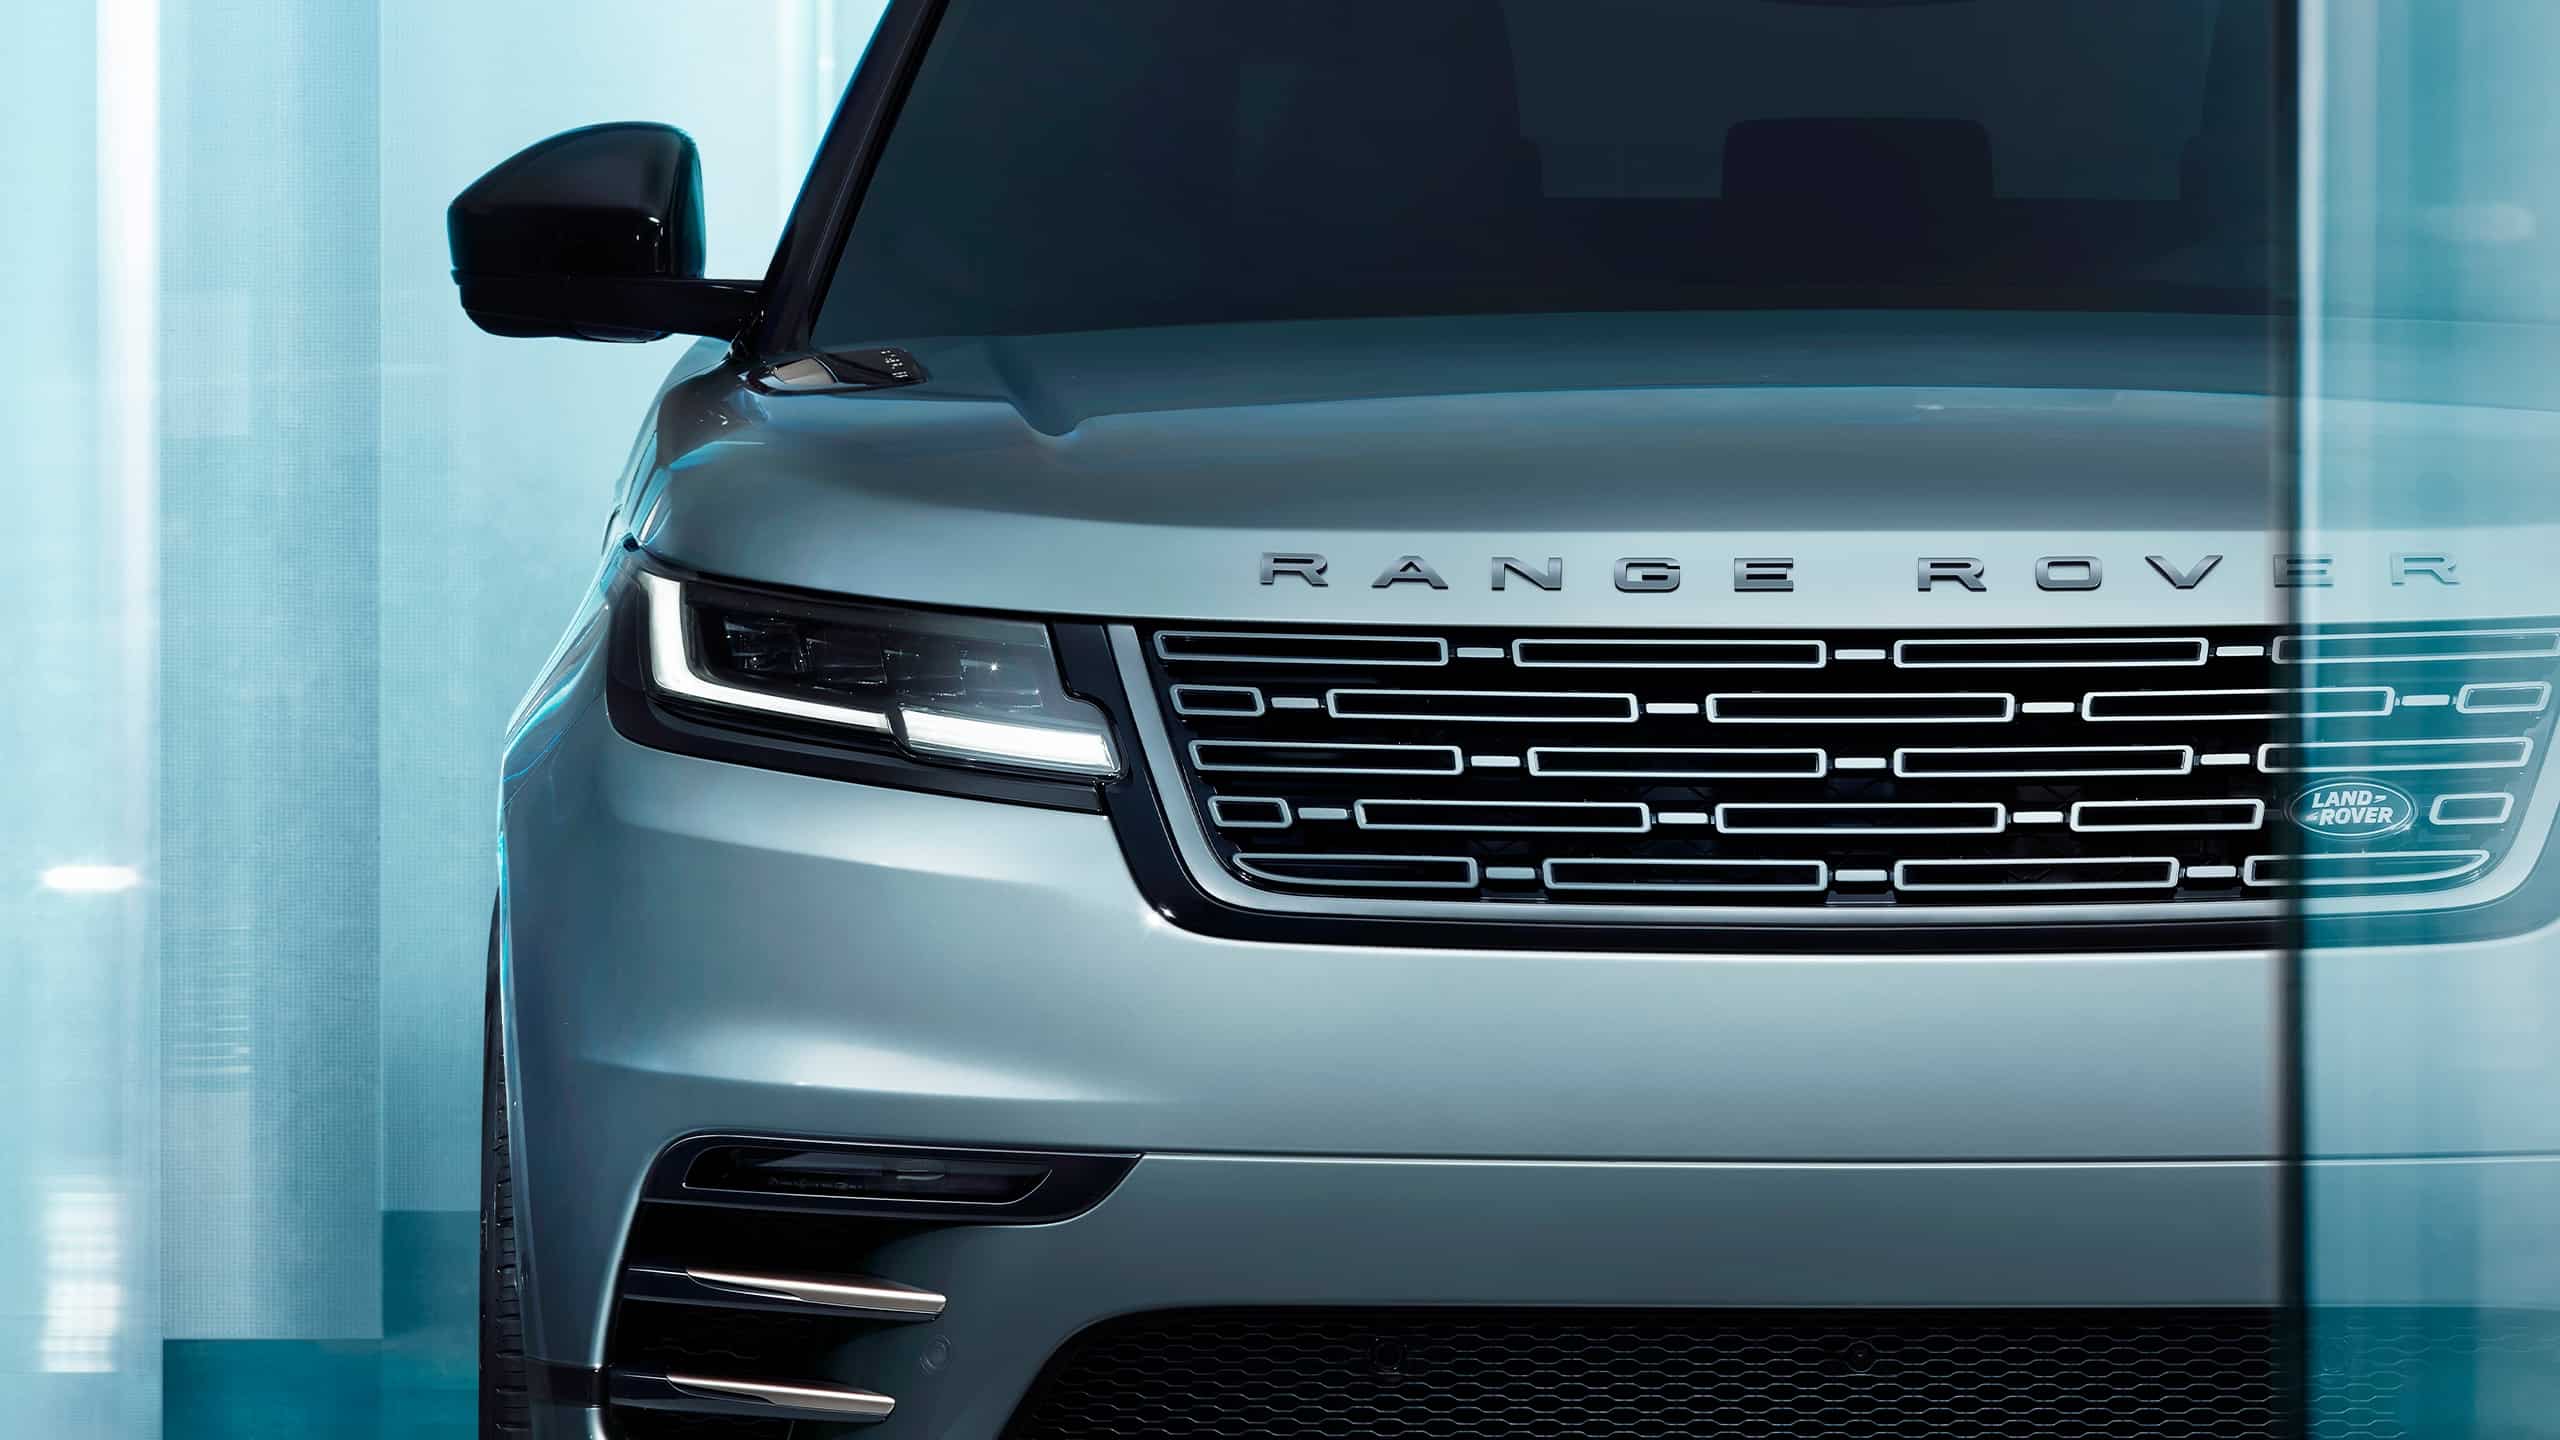 Range Rover Velar front close-up